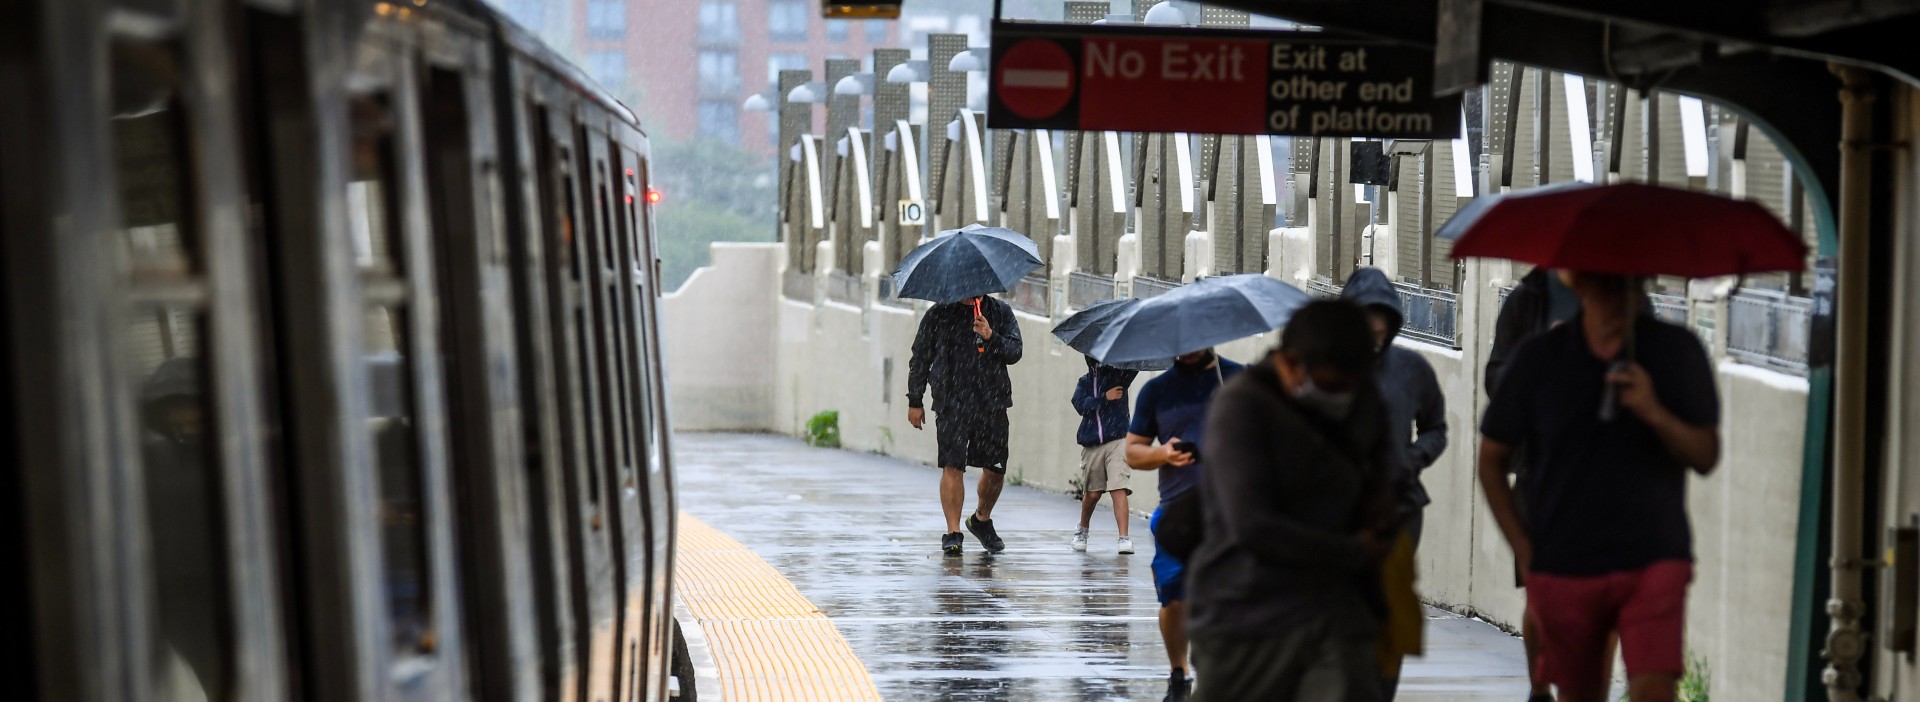 People walk on a subway platform during a rain storm. 